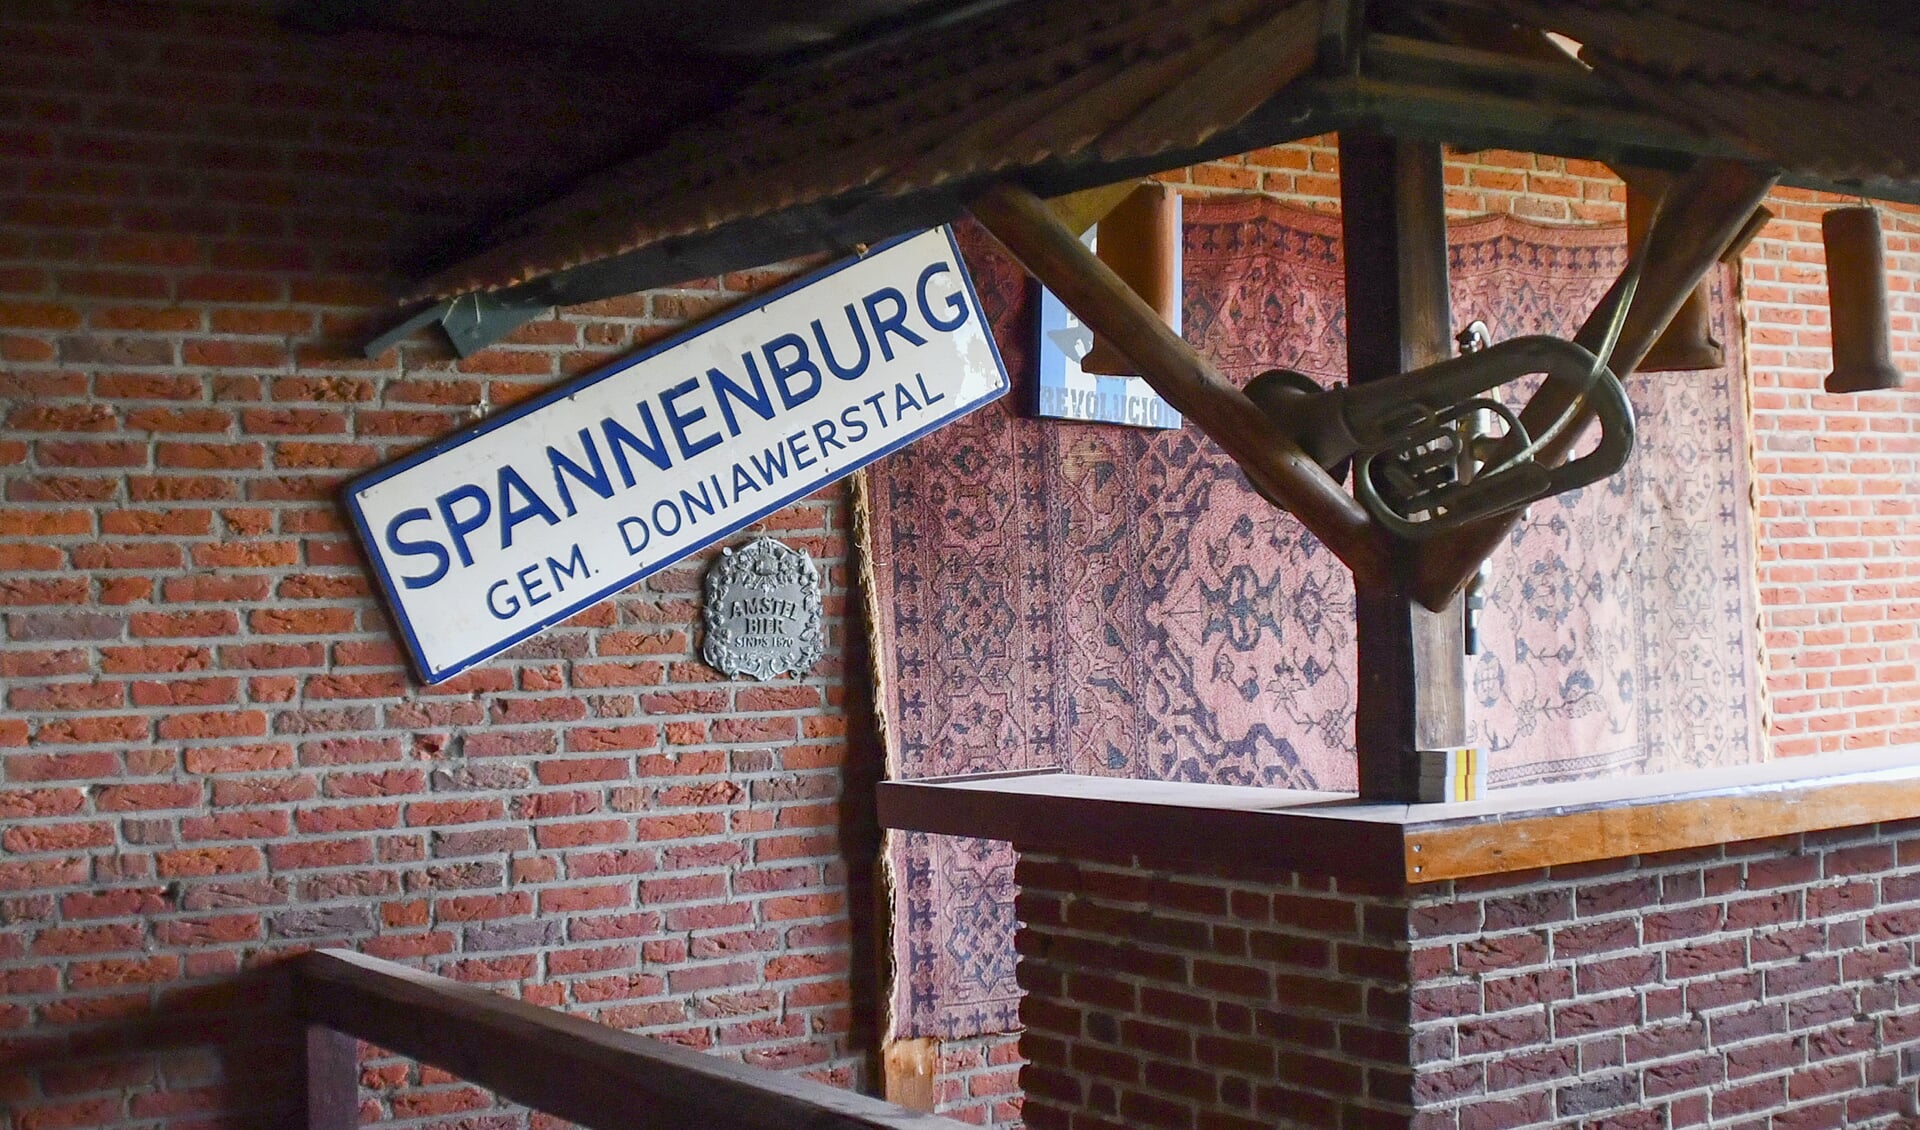 Spannenburg, gemeente Doniawerstal Foto Thewes Hoekstra